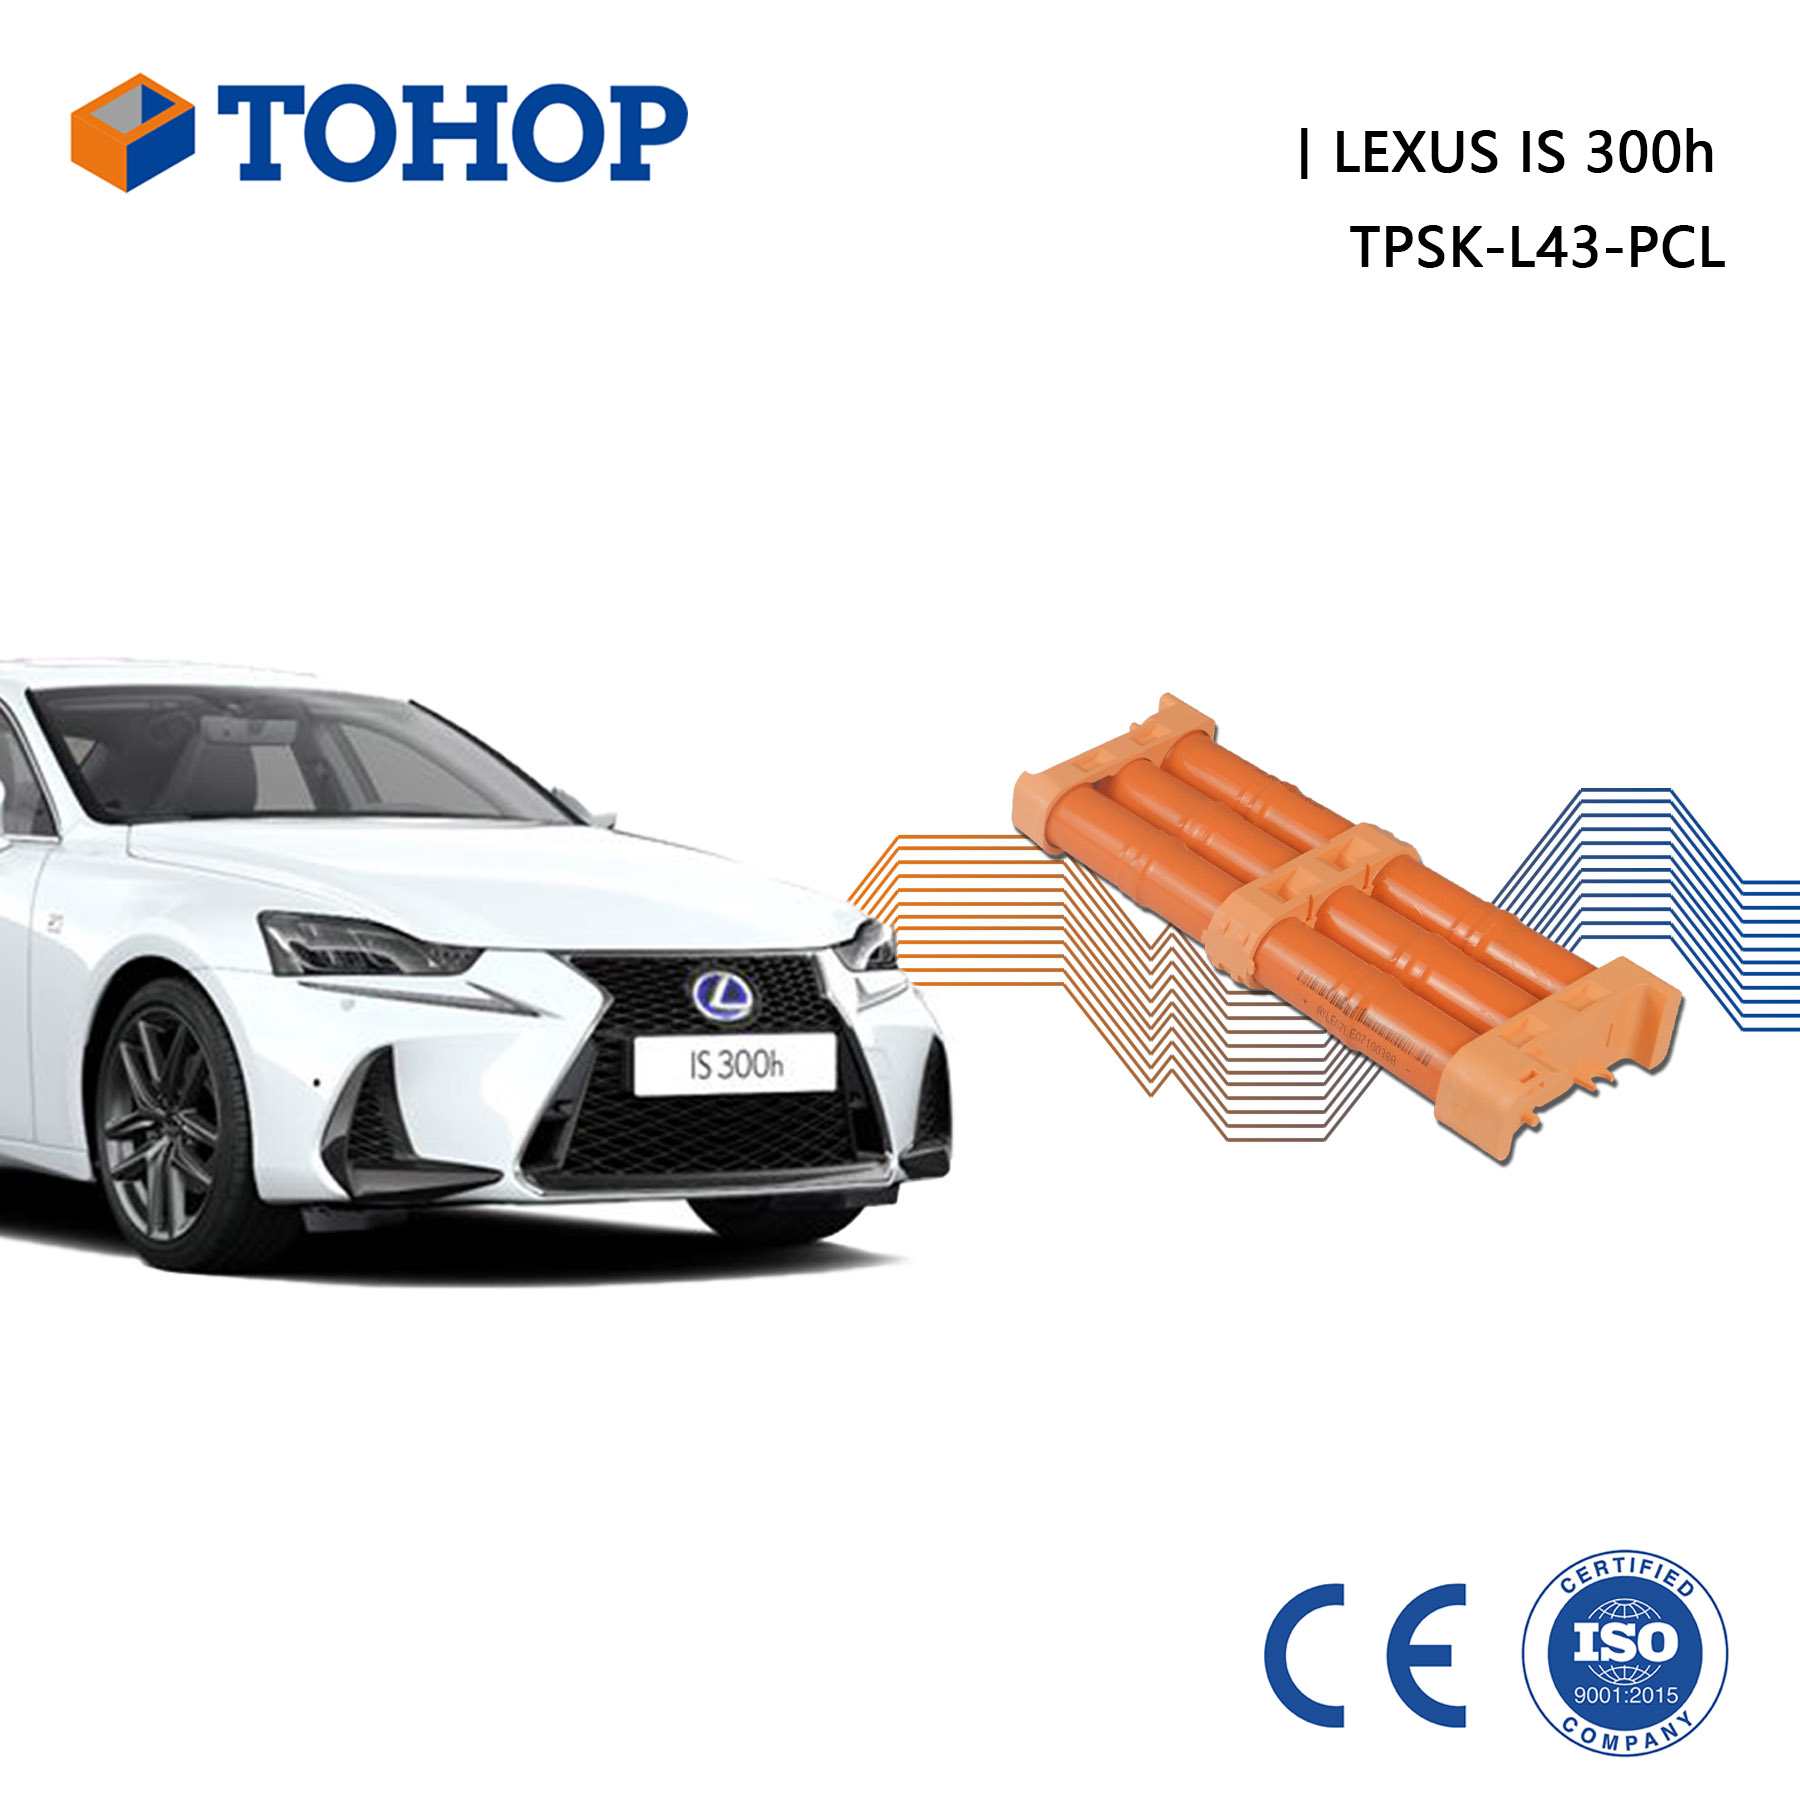 Célula de reemplazo de batería híbrida Lexus IS300h 14.4V 6.5Ah cilíndrica